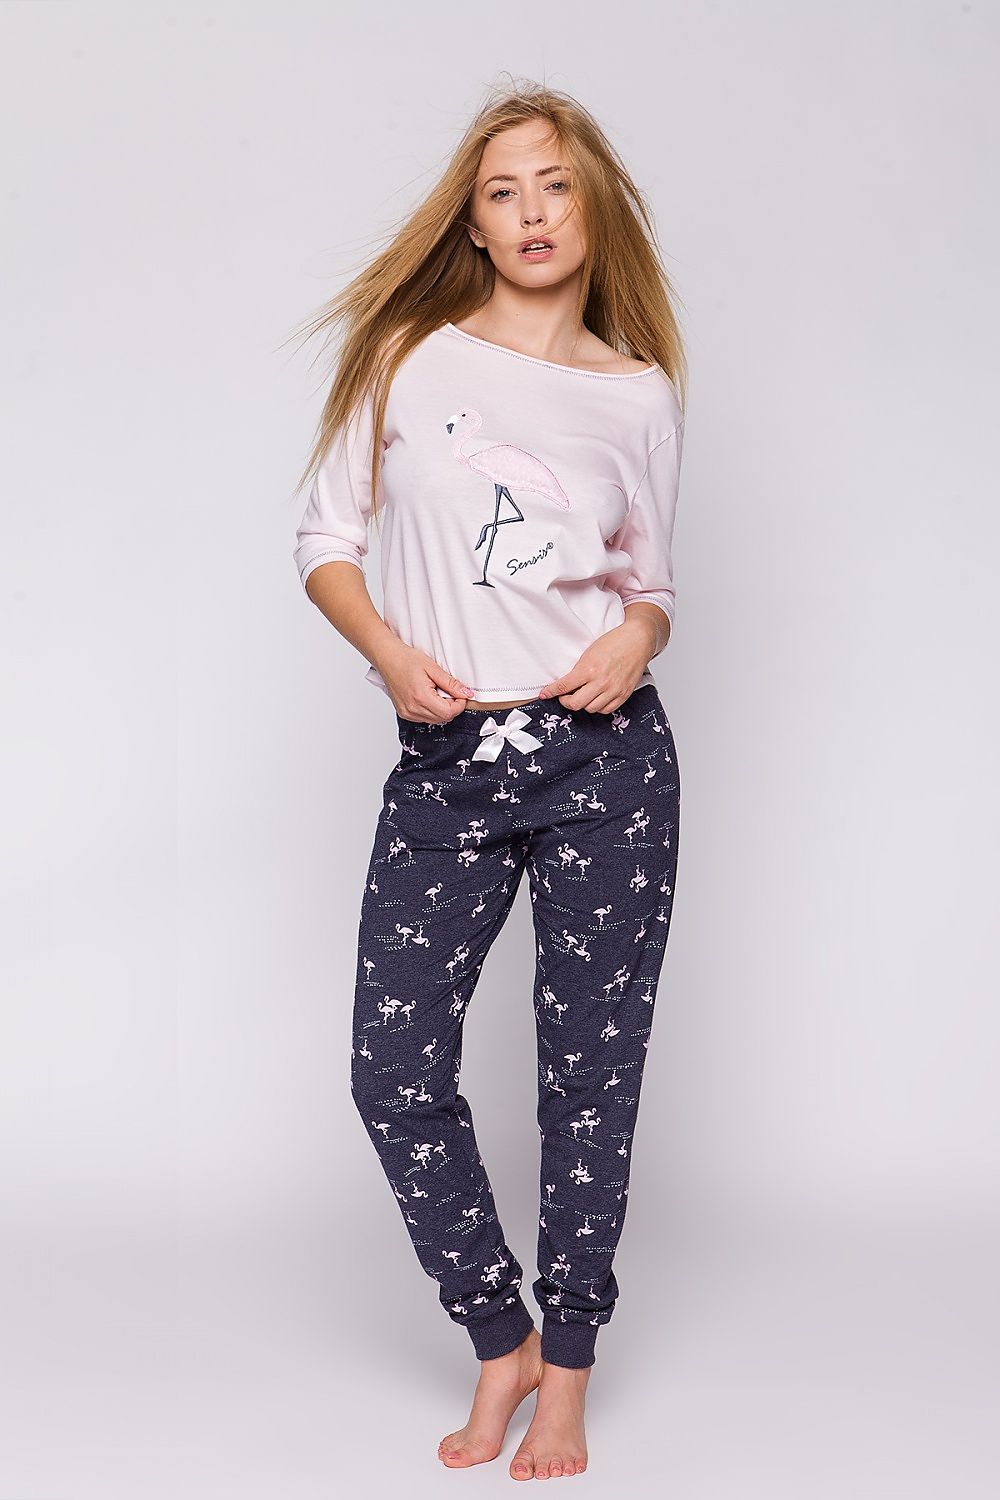 Pyjama model 126494 Sensis Women`s Pyjamas, Sleepwear Sets Wholesale ...